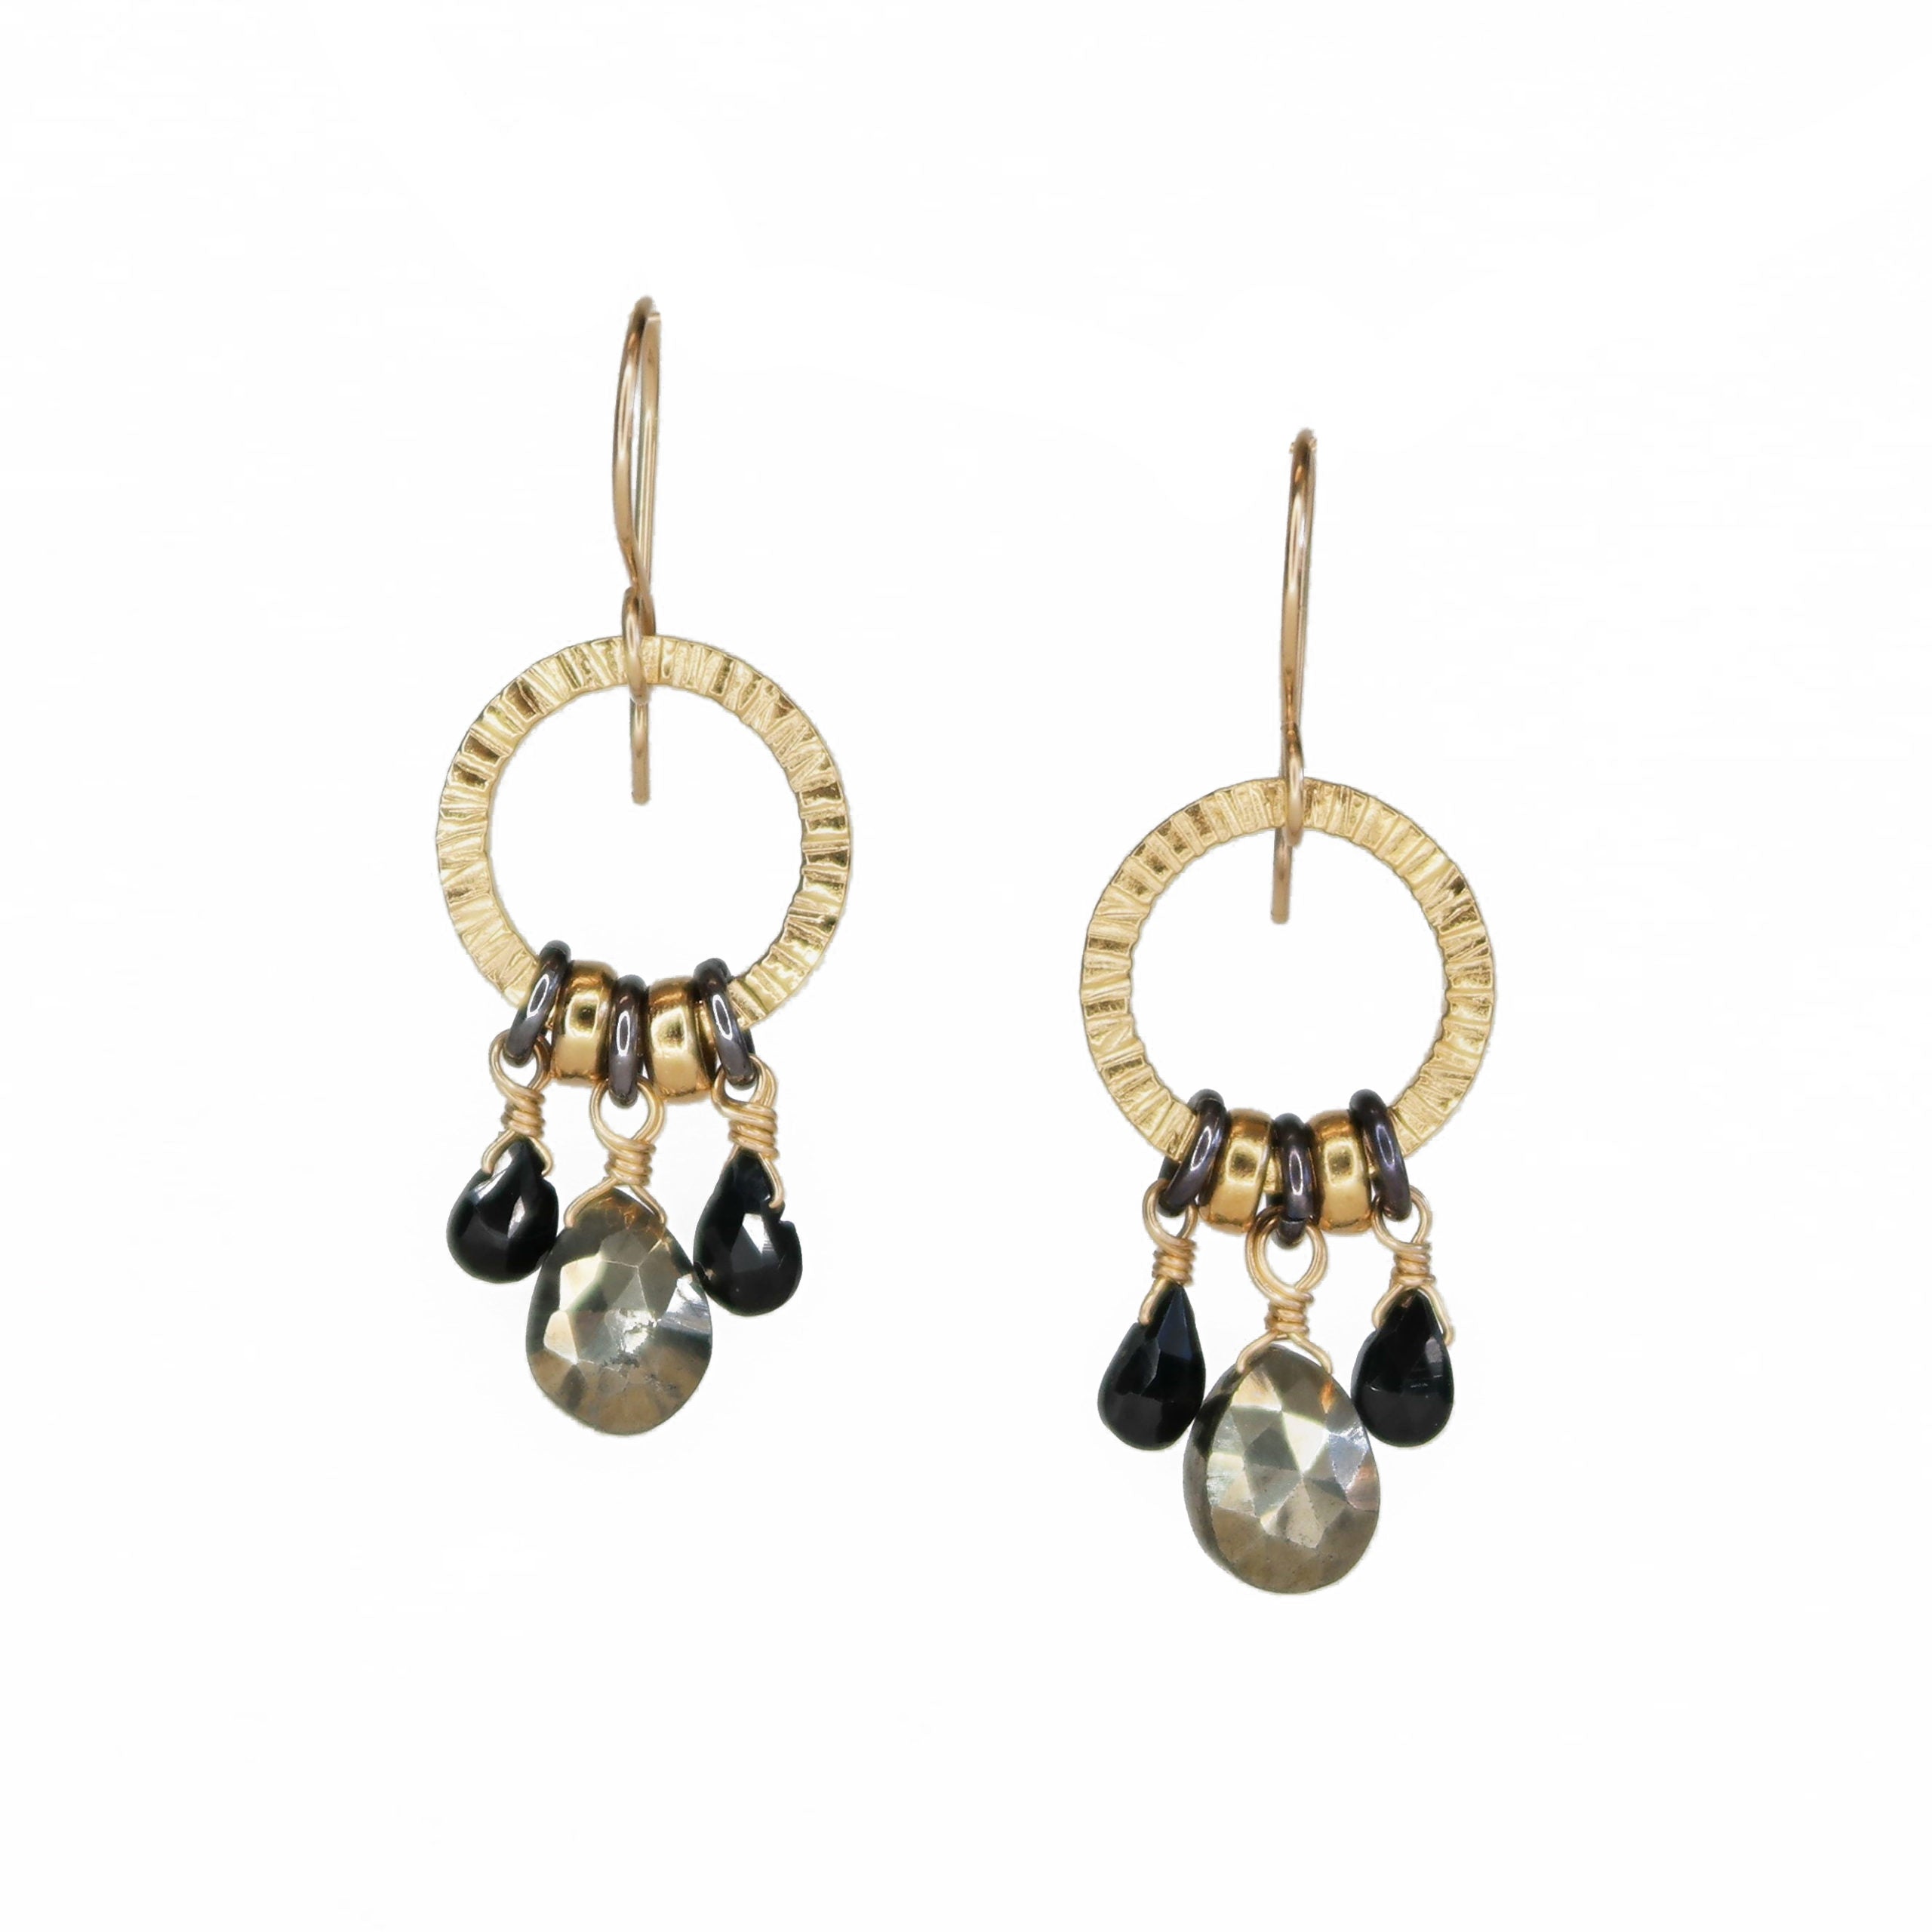 Hammered Gold Tone Boho Style Drop Statement Earrings | eBay